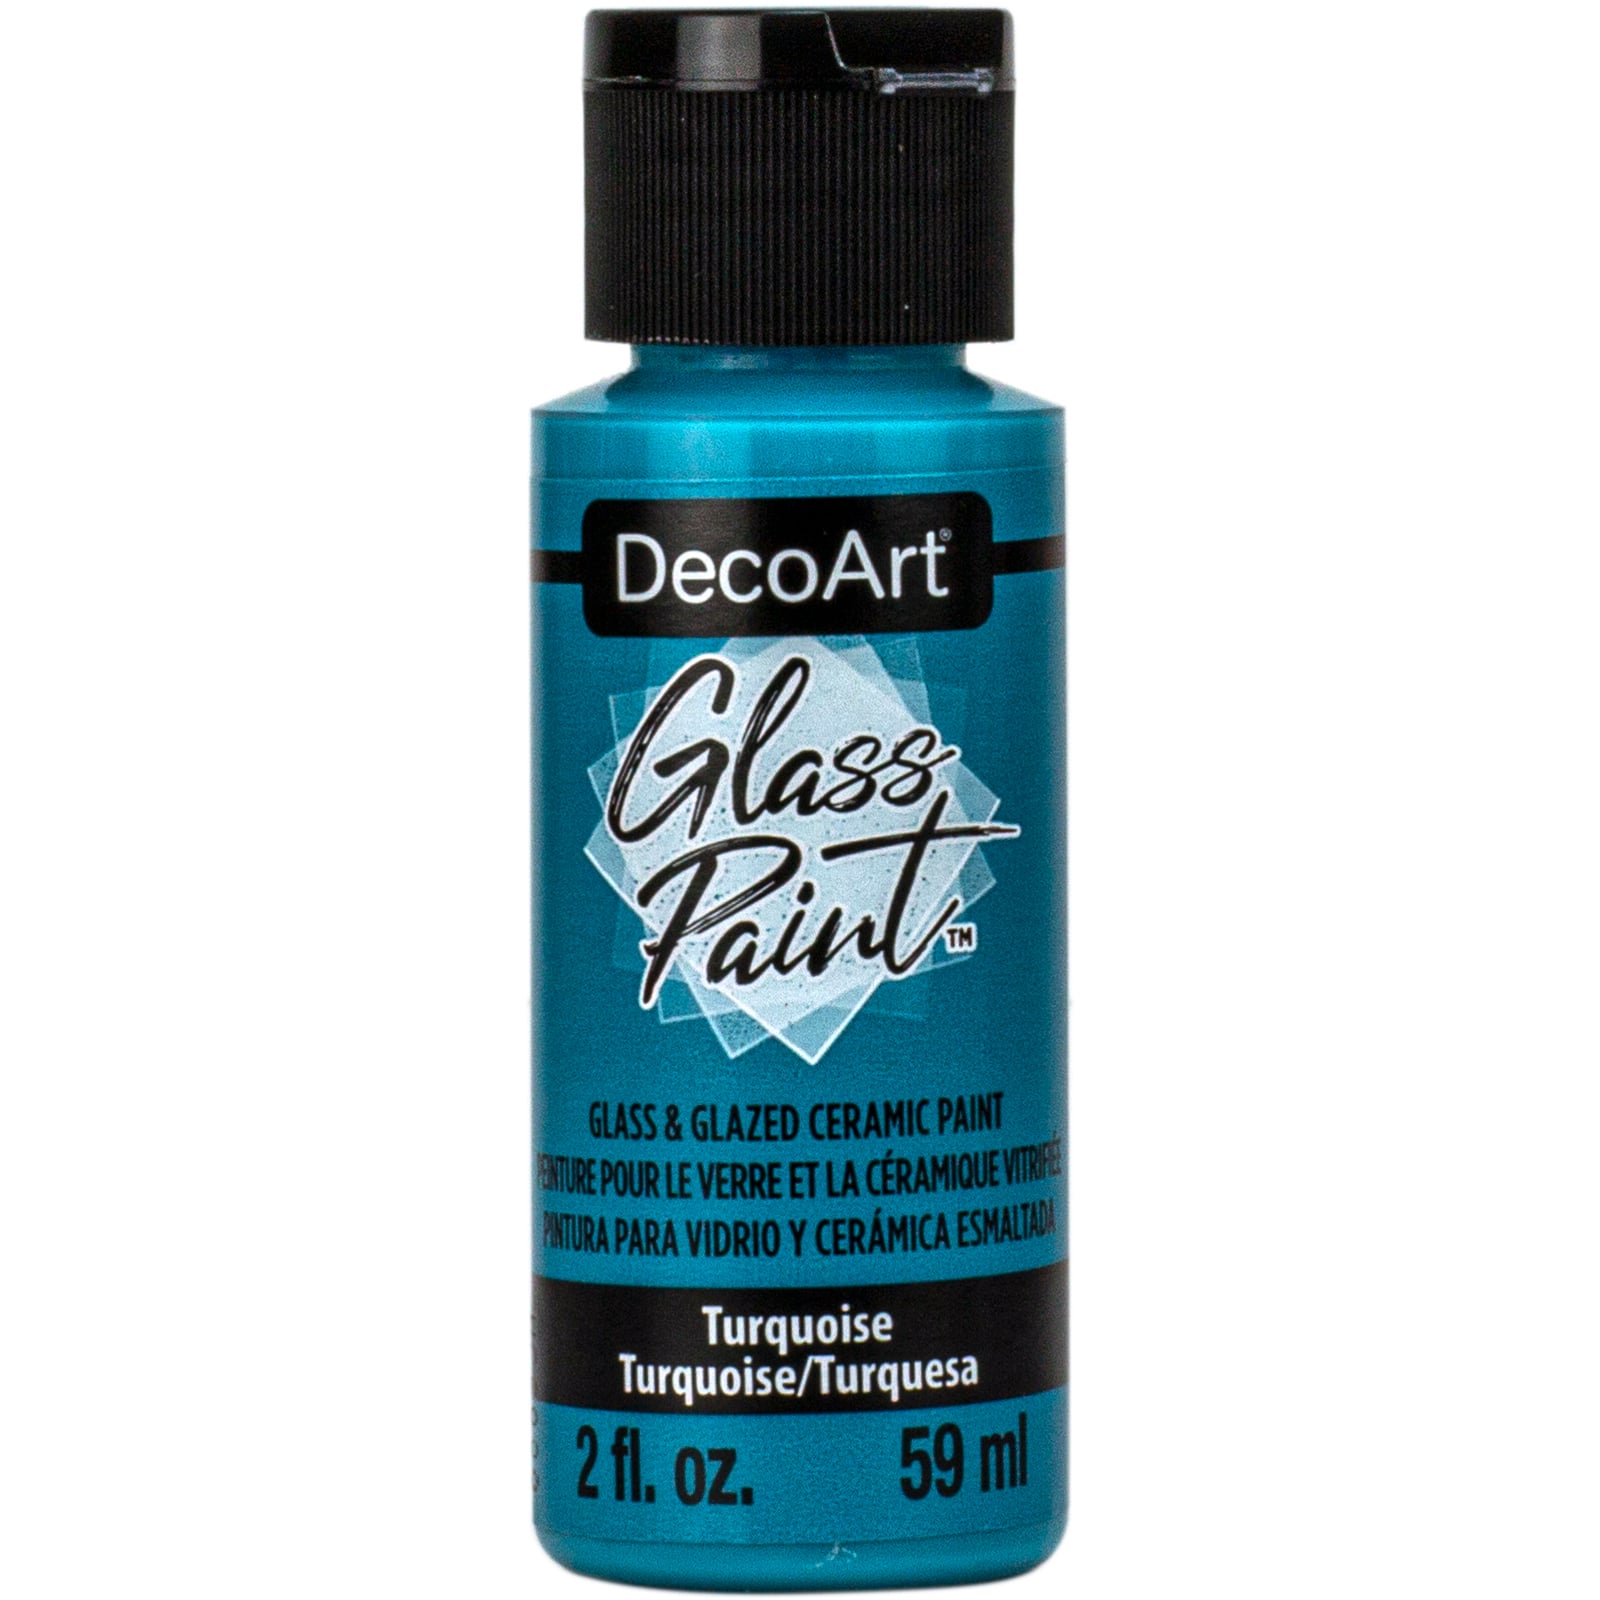 FolkArt 2 oz. Home Decor Chalk Acrylic Craft Paint Set, 9 Colors 2oz, Top  Pastels 